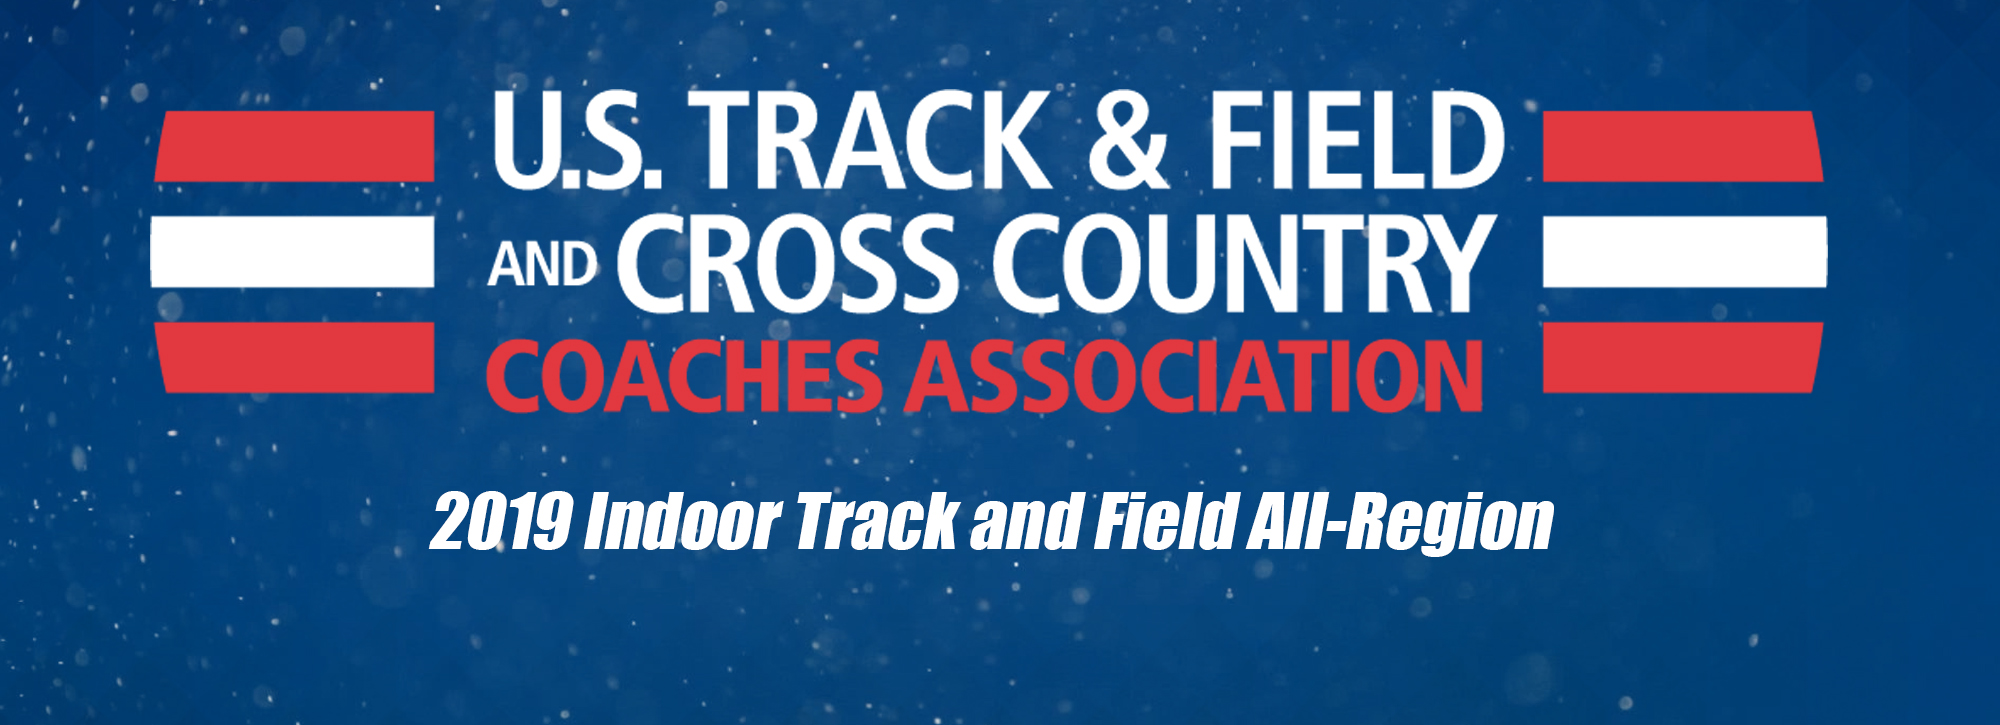 GLIAC track and field athletes receive 112 USTFCCCA all-region awards